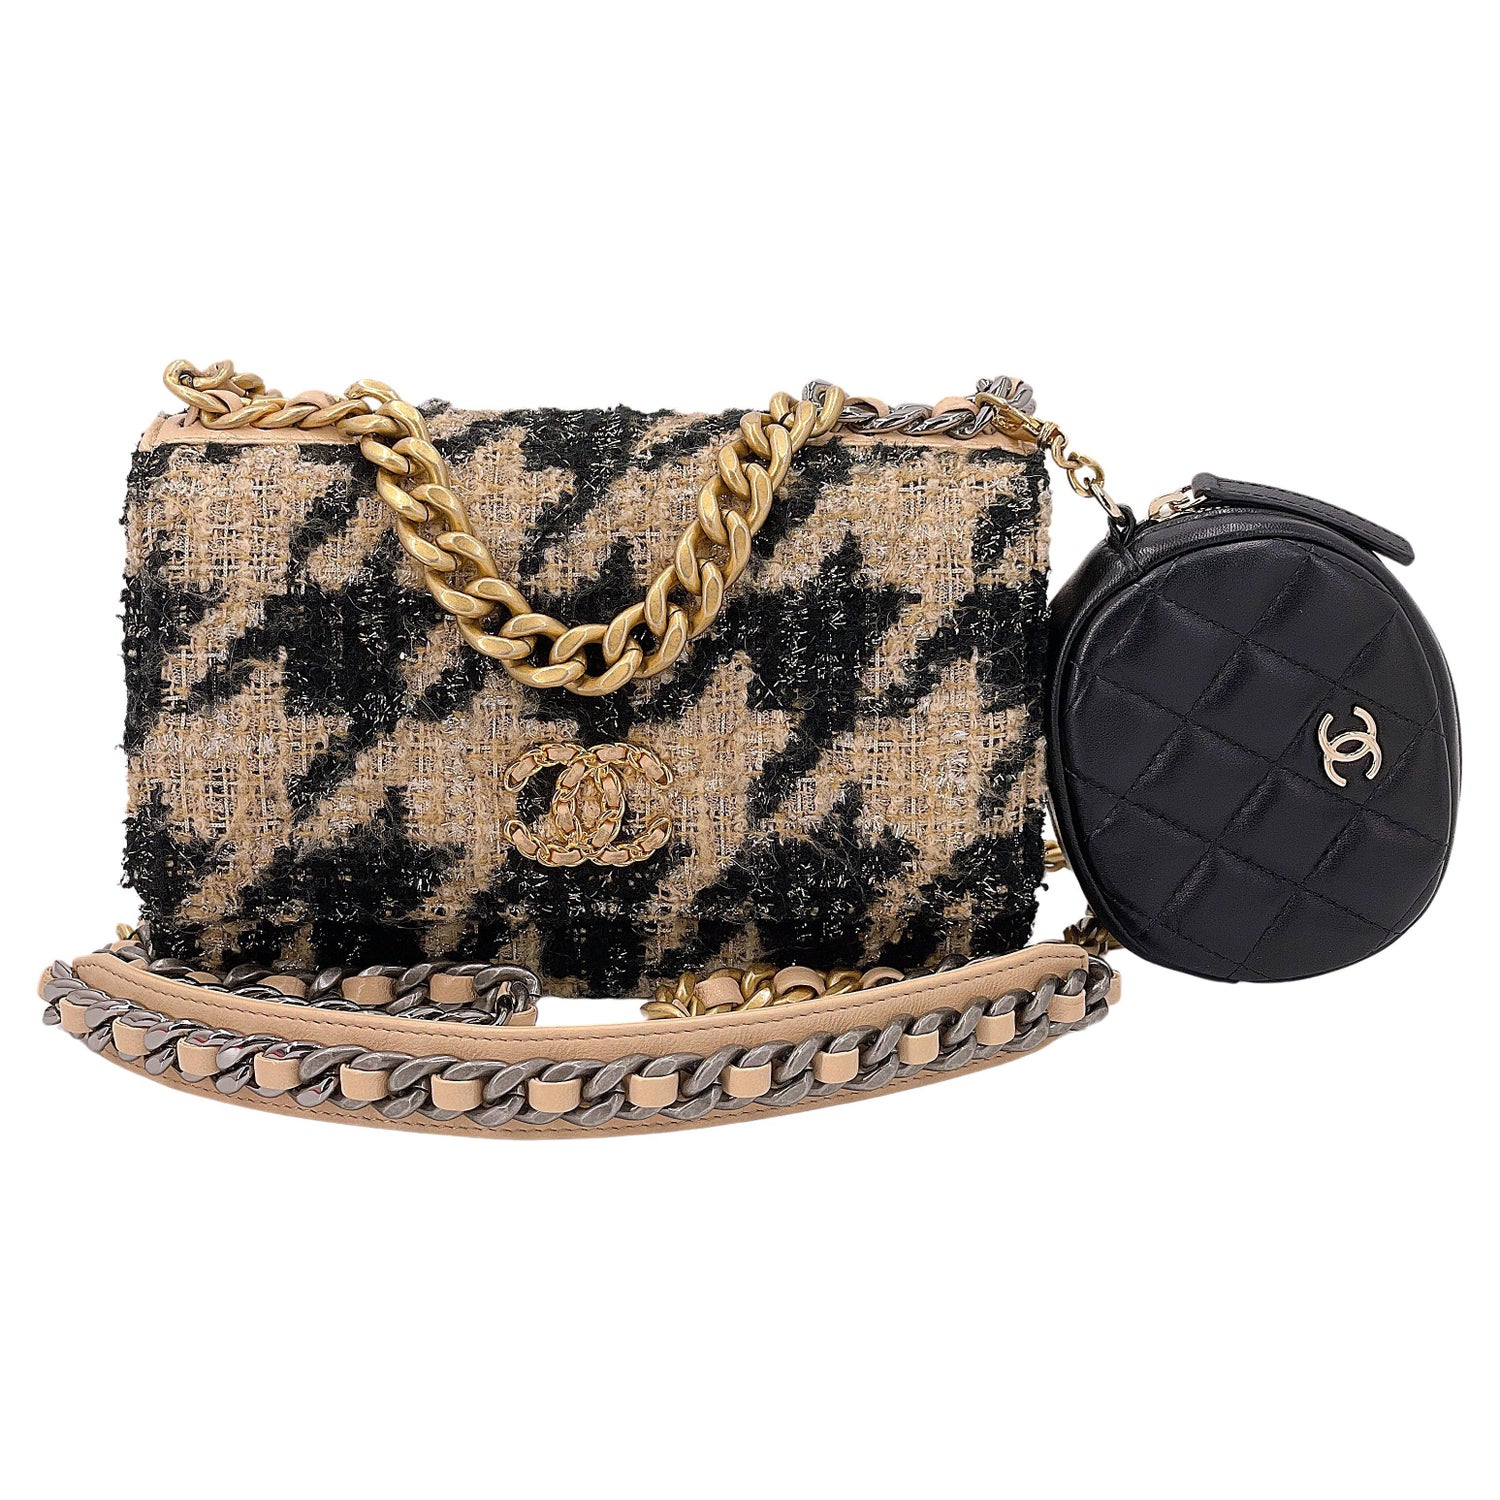 Haute Couture: $5,100 Python Shoulder Bag by The Row - Haute Living